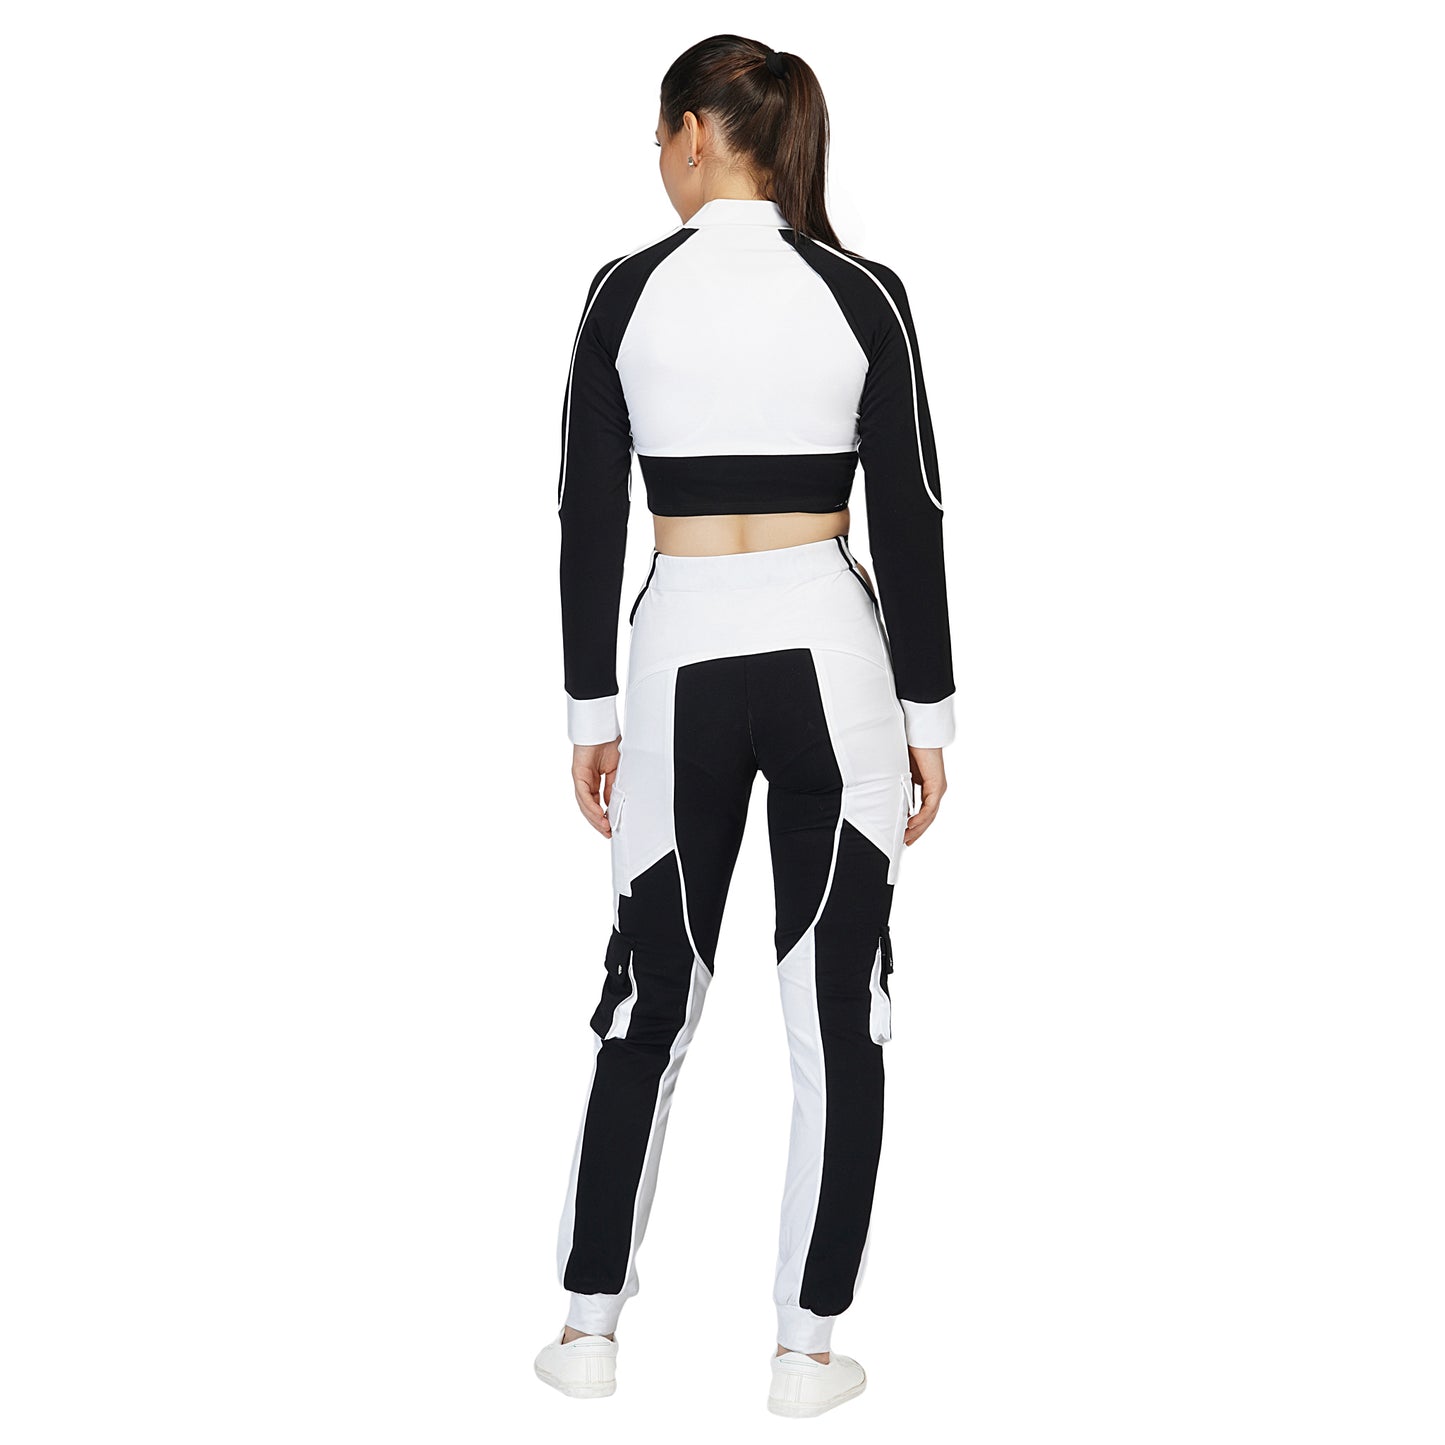 SLAY. Women's Tracksuit - Black & White Colorblock Crop Jacket & High Waist Cargo Pants Co-ord Set - Activewear Streetwear